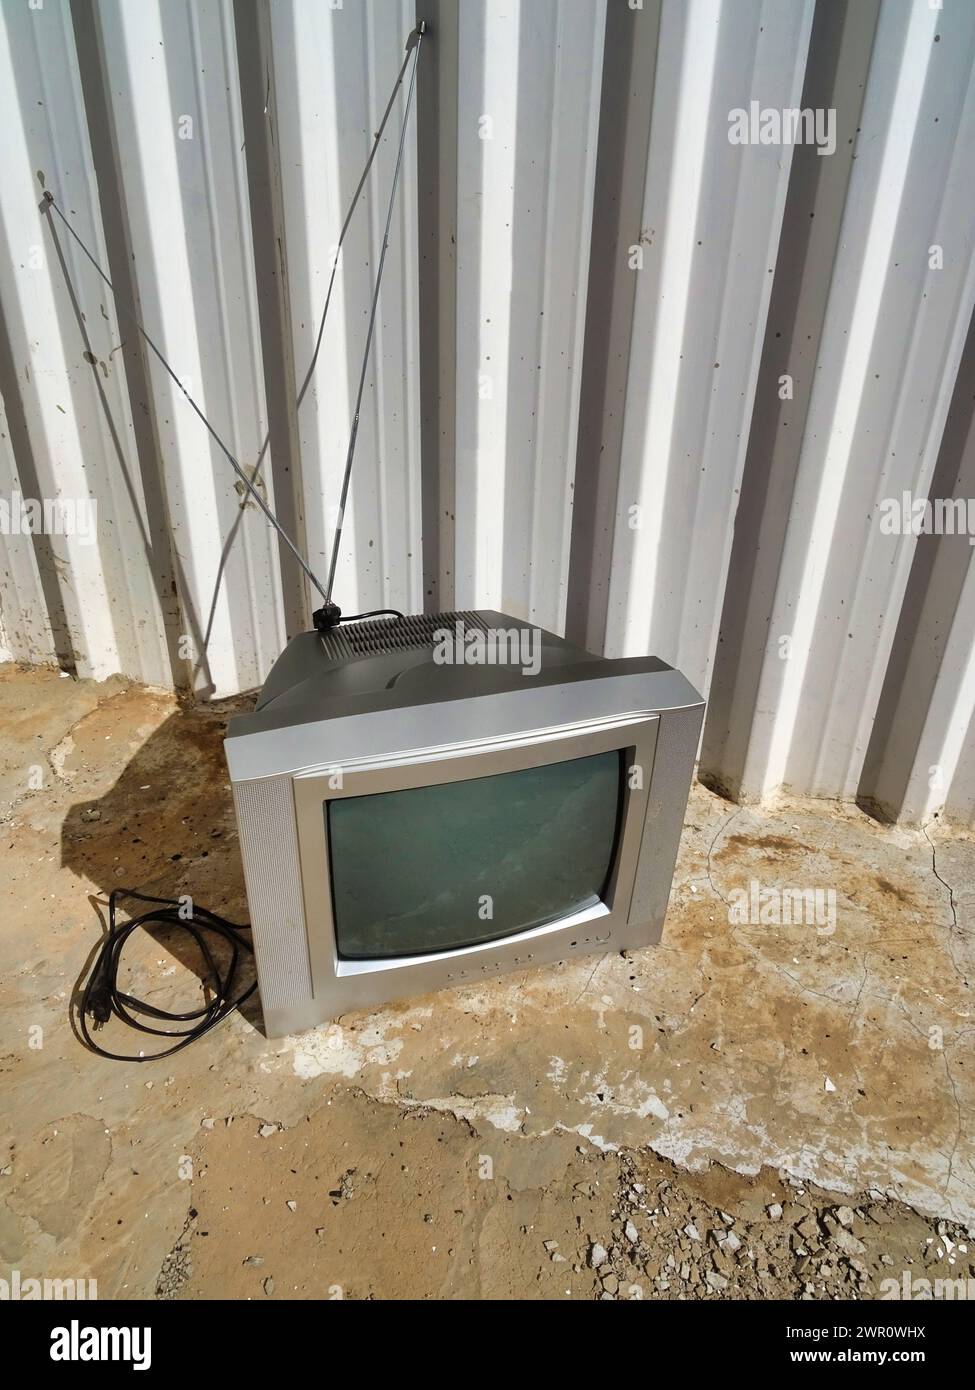 Old TV set abandoned on rusty metal rooftop Stock Photo